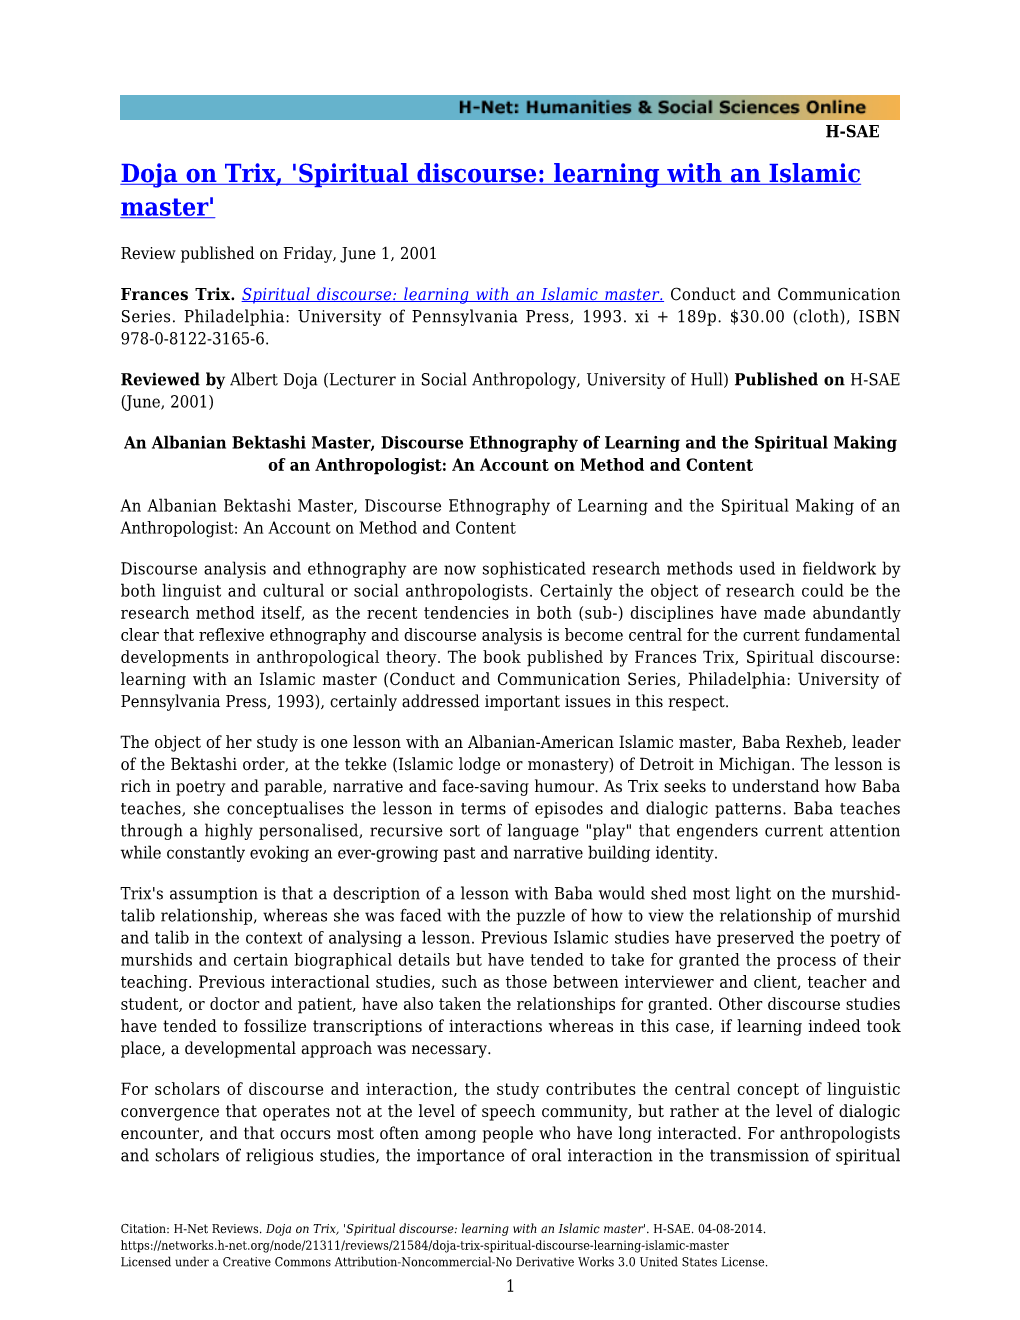 Doja on Trix, 'Spiritual Discourse: Learning with an Islamic Master'